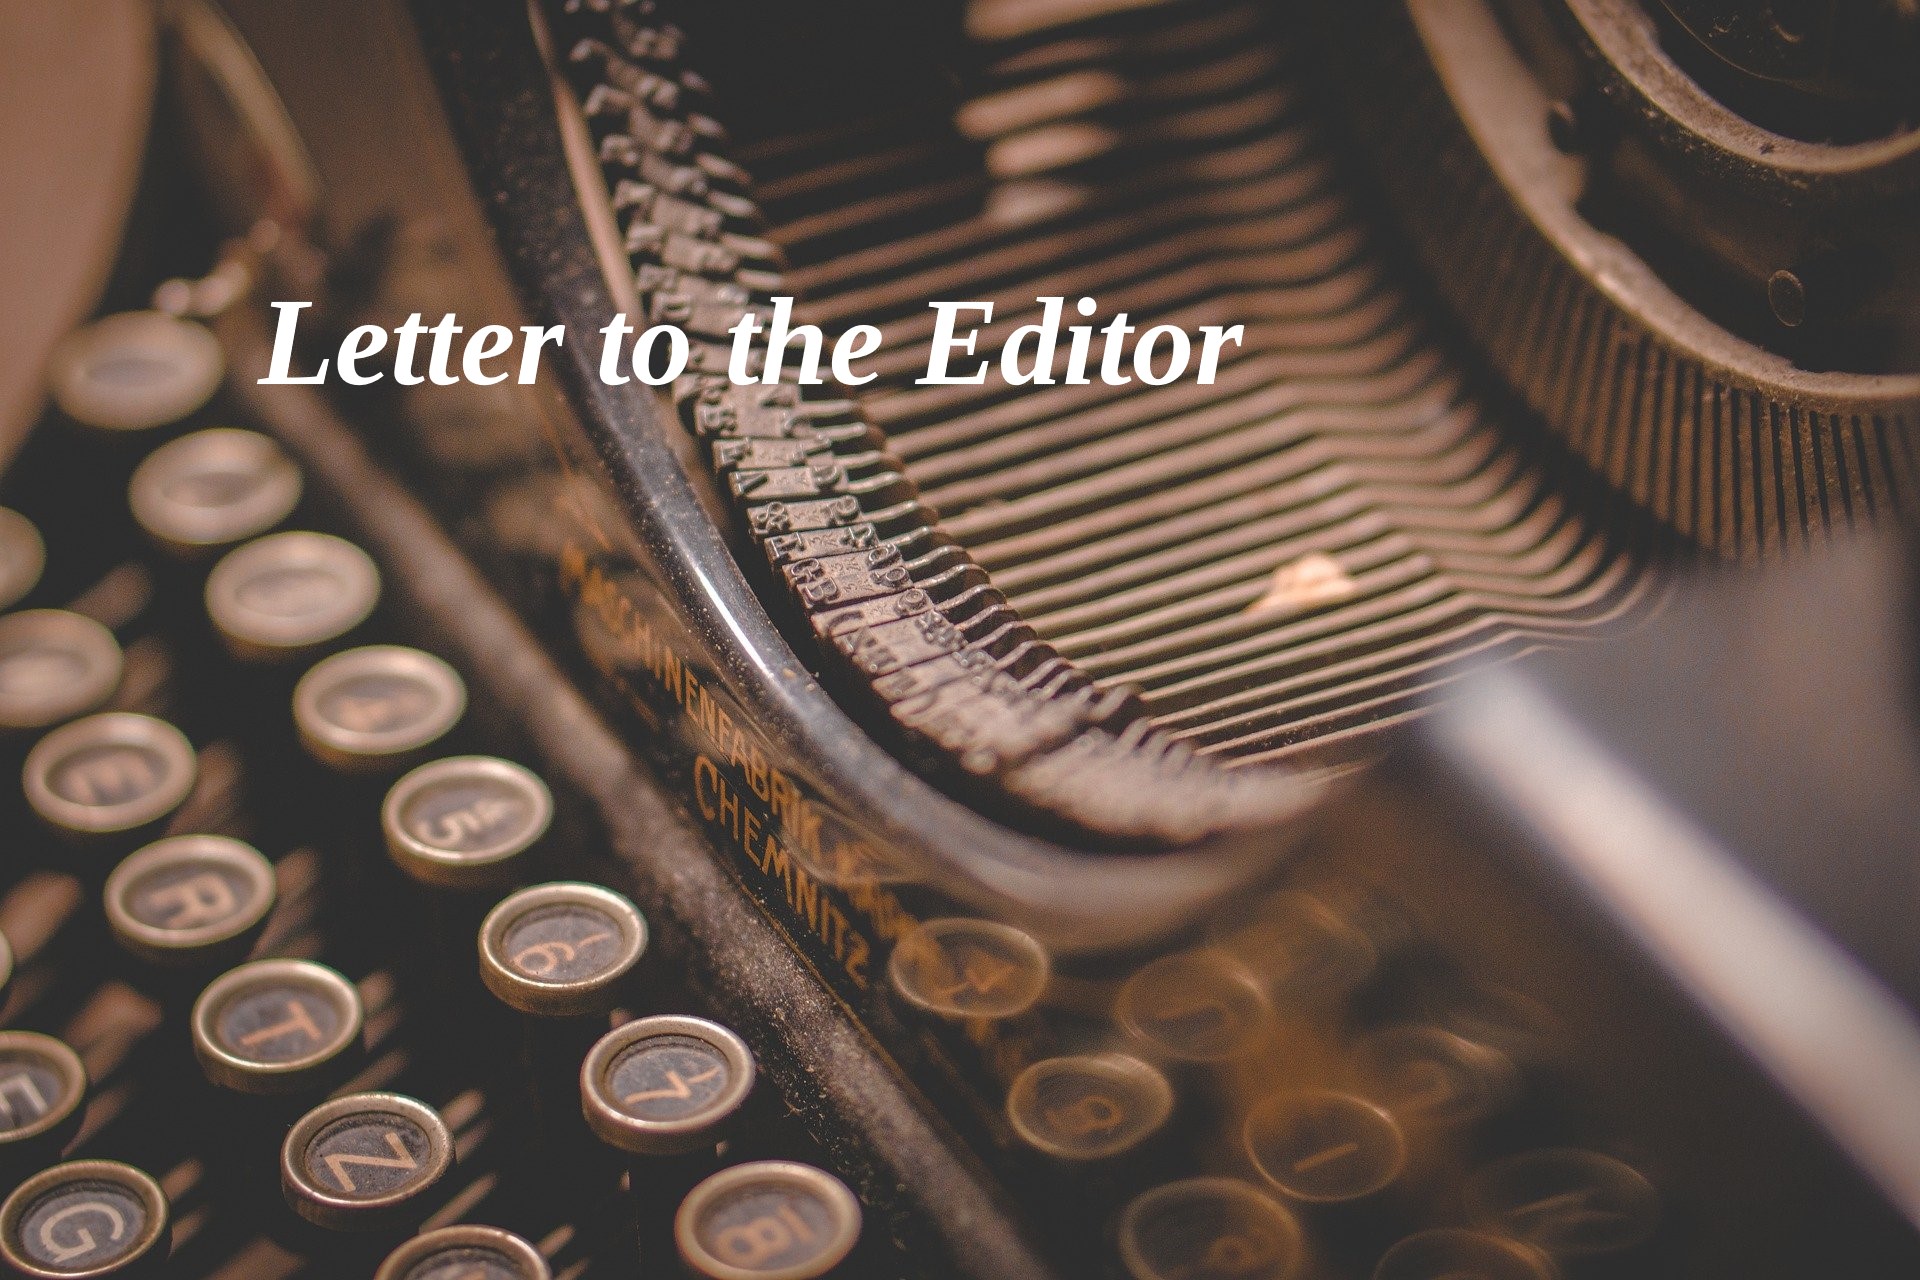 Letter to the Editor Image by Image by Patrik Houštecký from Pixabay